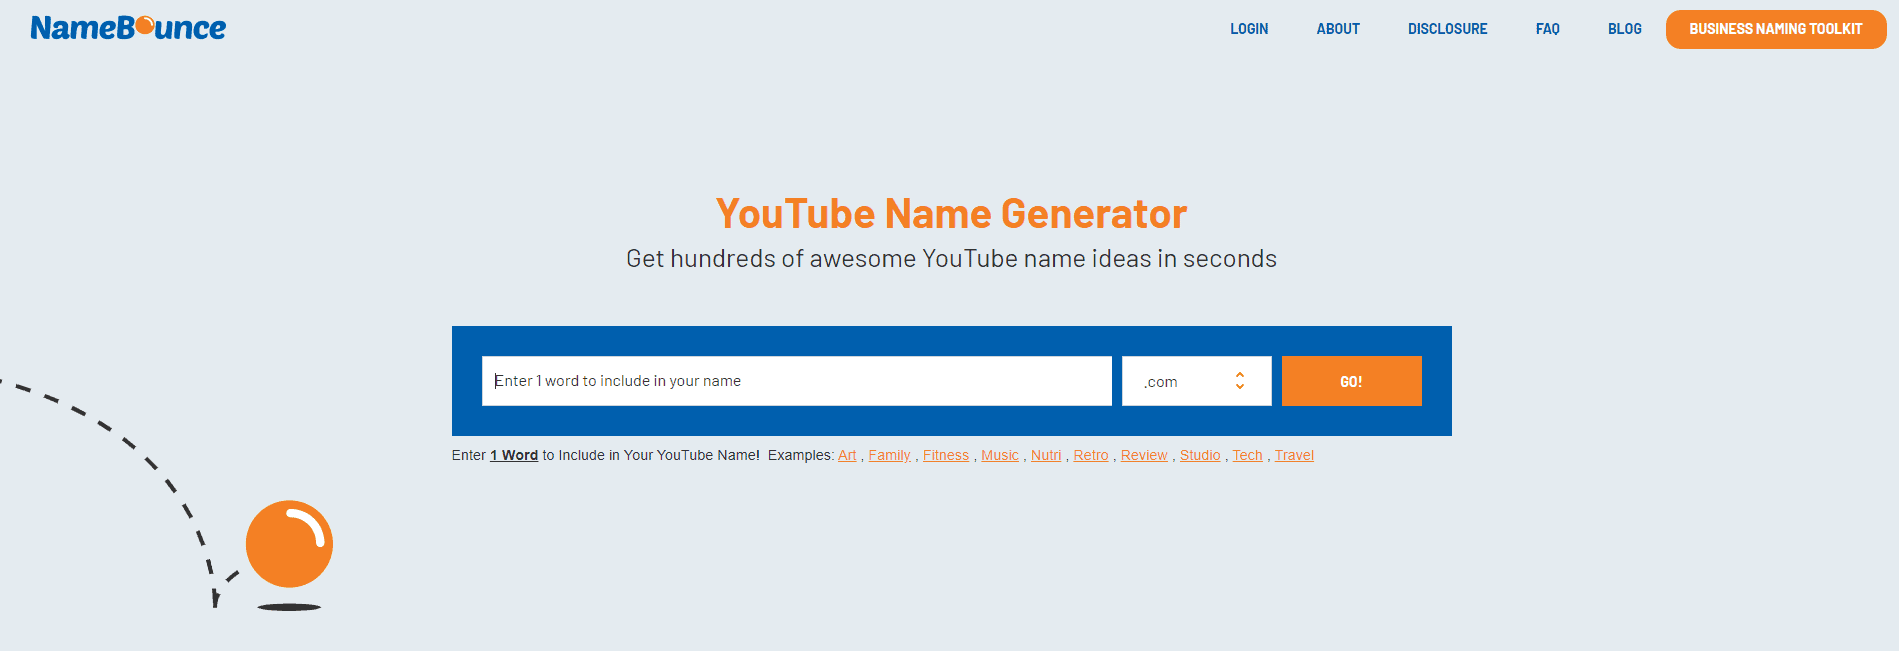 Namebounce YouTube Name Generator